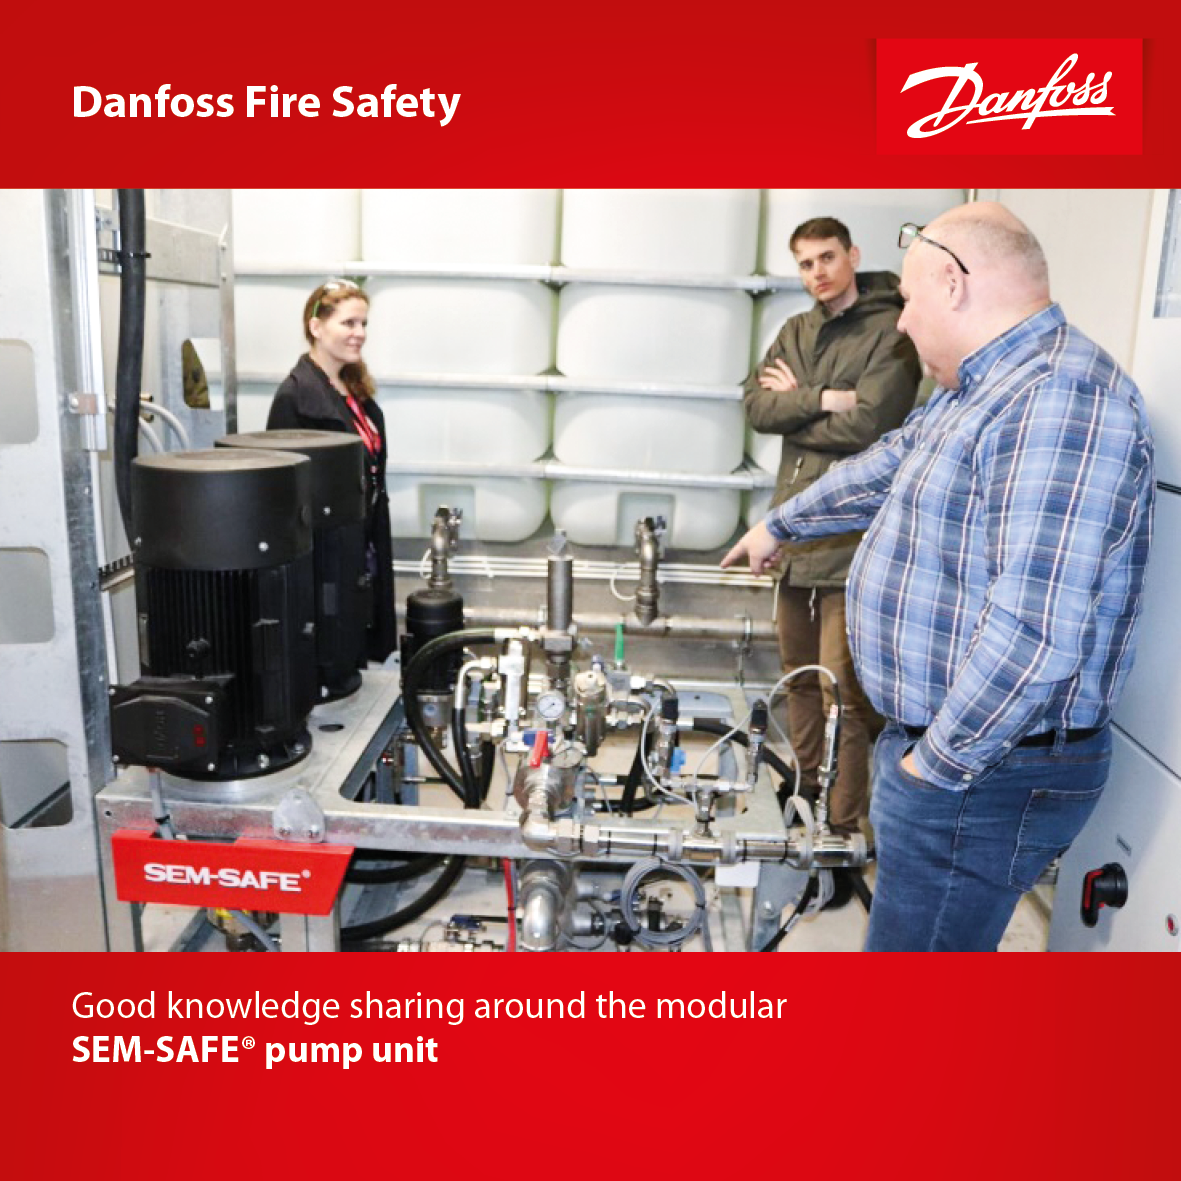 Good knowledge sharing around the modular SEM-SAFE® pump unit